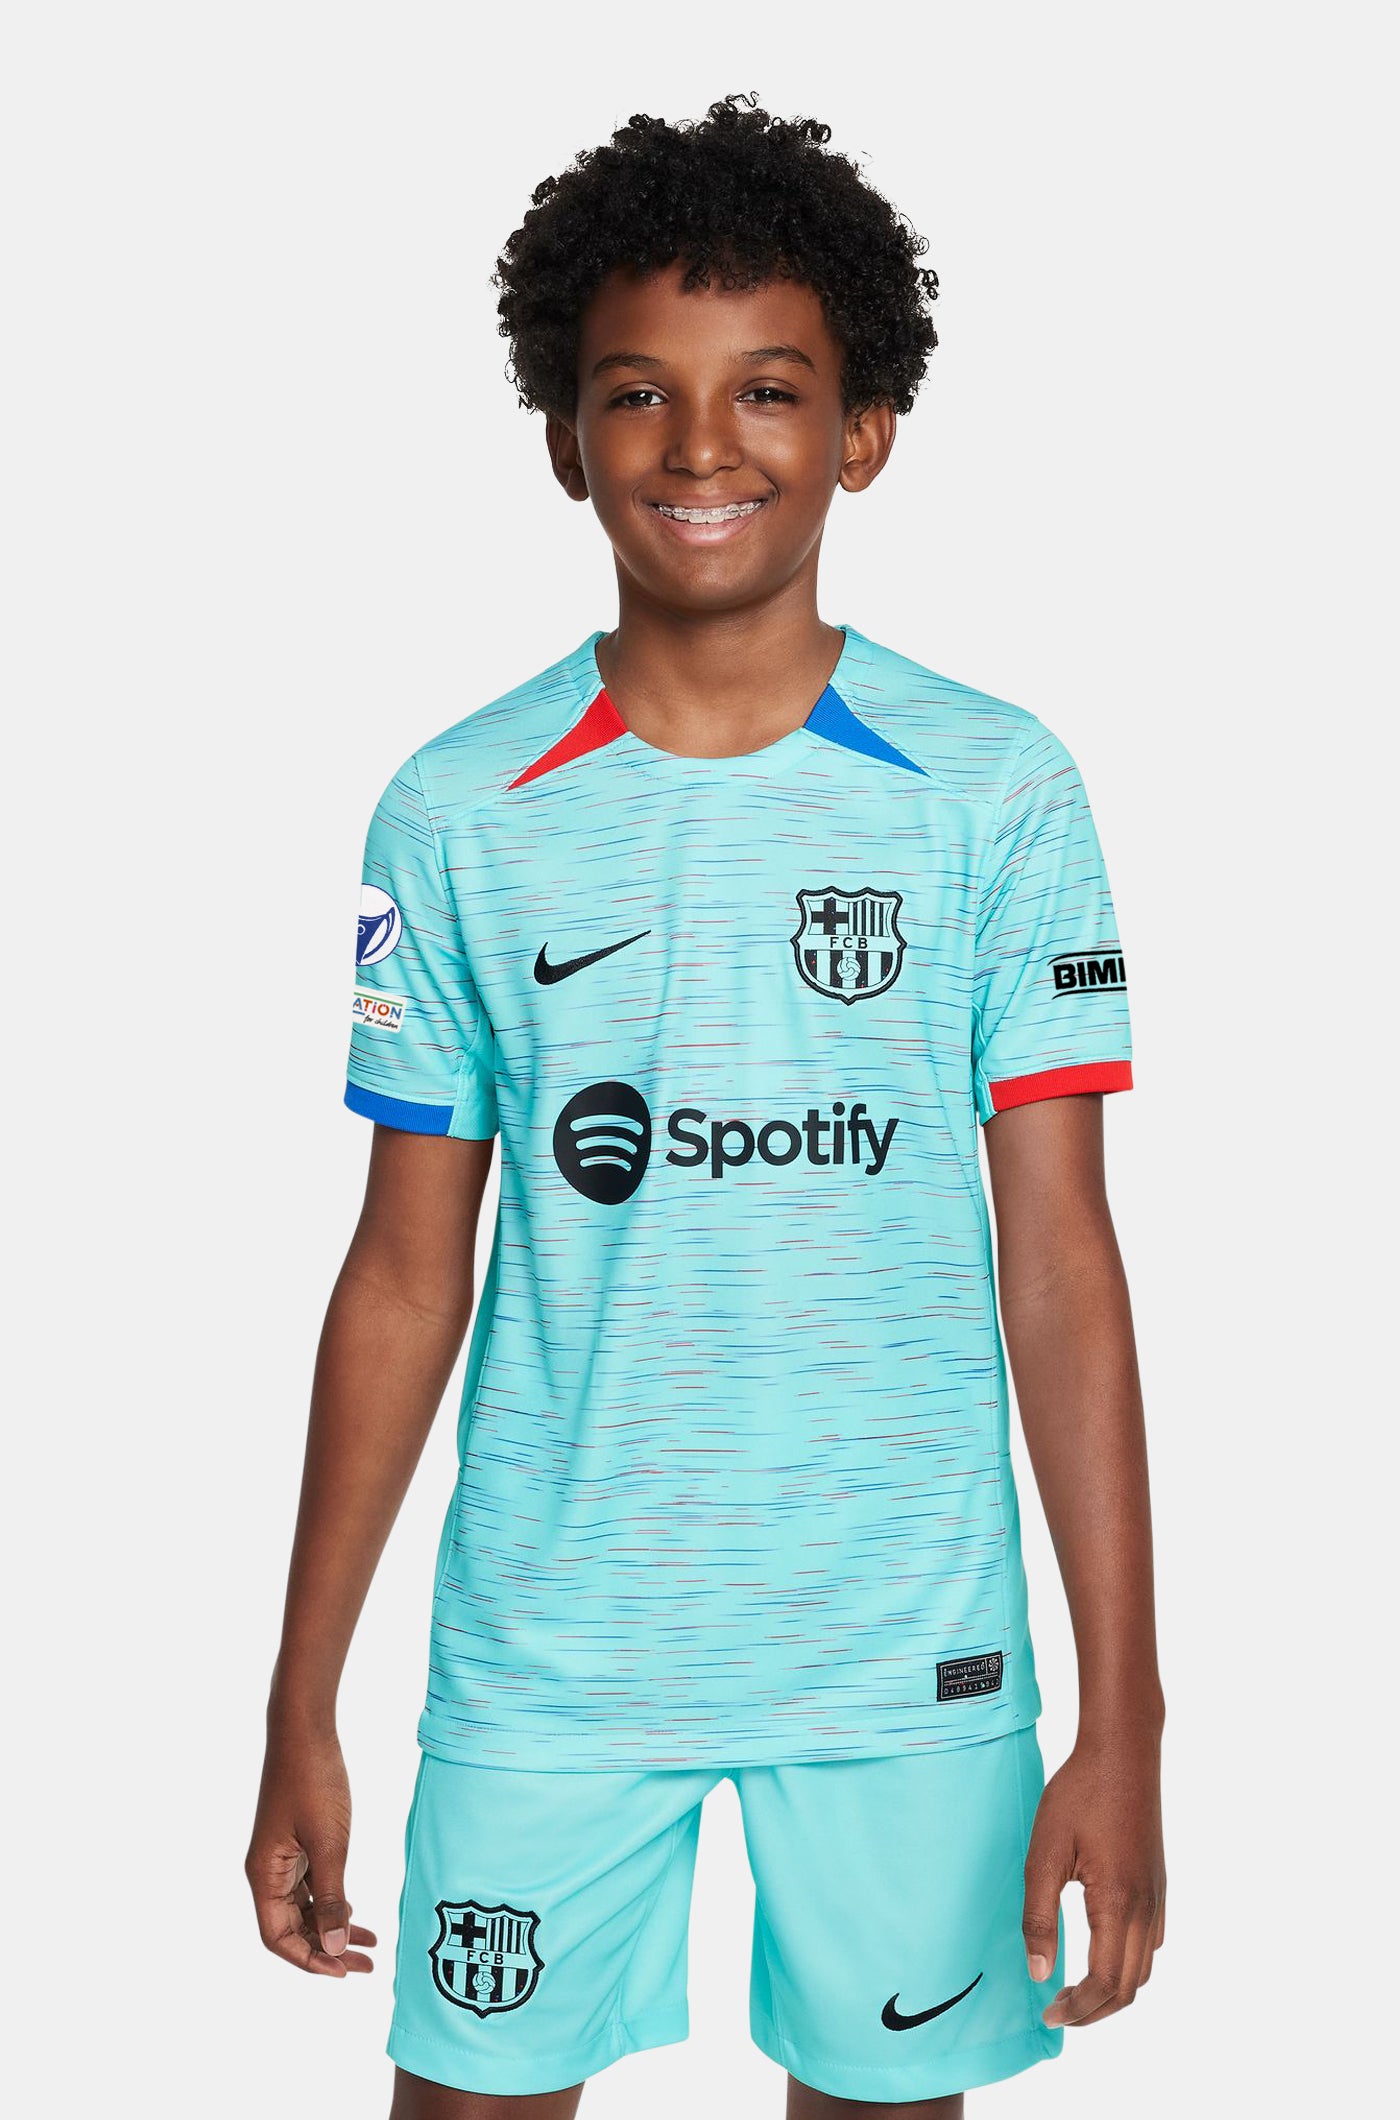 UWCL FC Barcelona third shirt 23/24 – Junior  - O. BATLLE